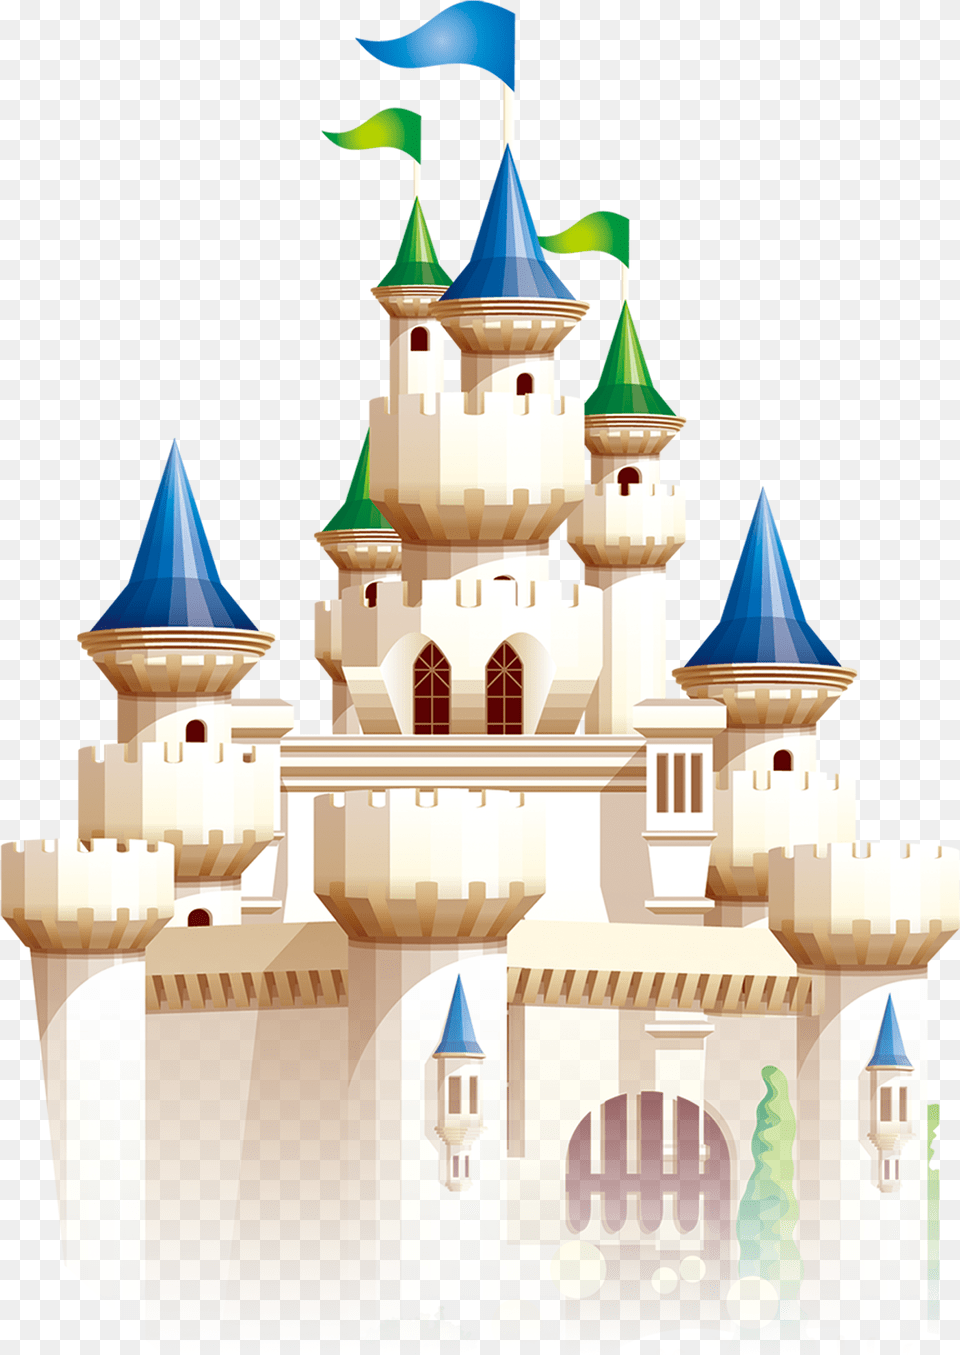 Cartoon Fantasy Fairytale Castle Cartoon Castle, Architecture, Building, Fortress, Spire Free Transparent Png